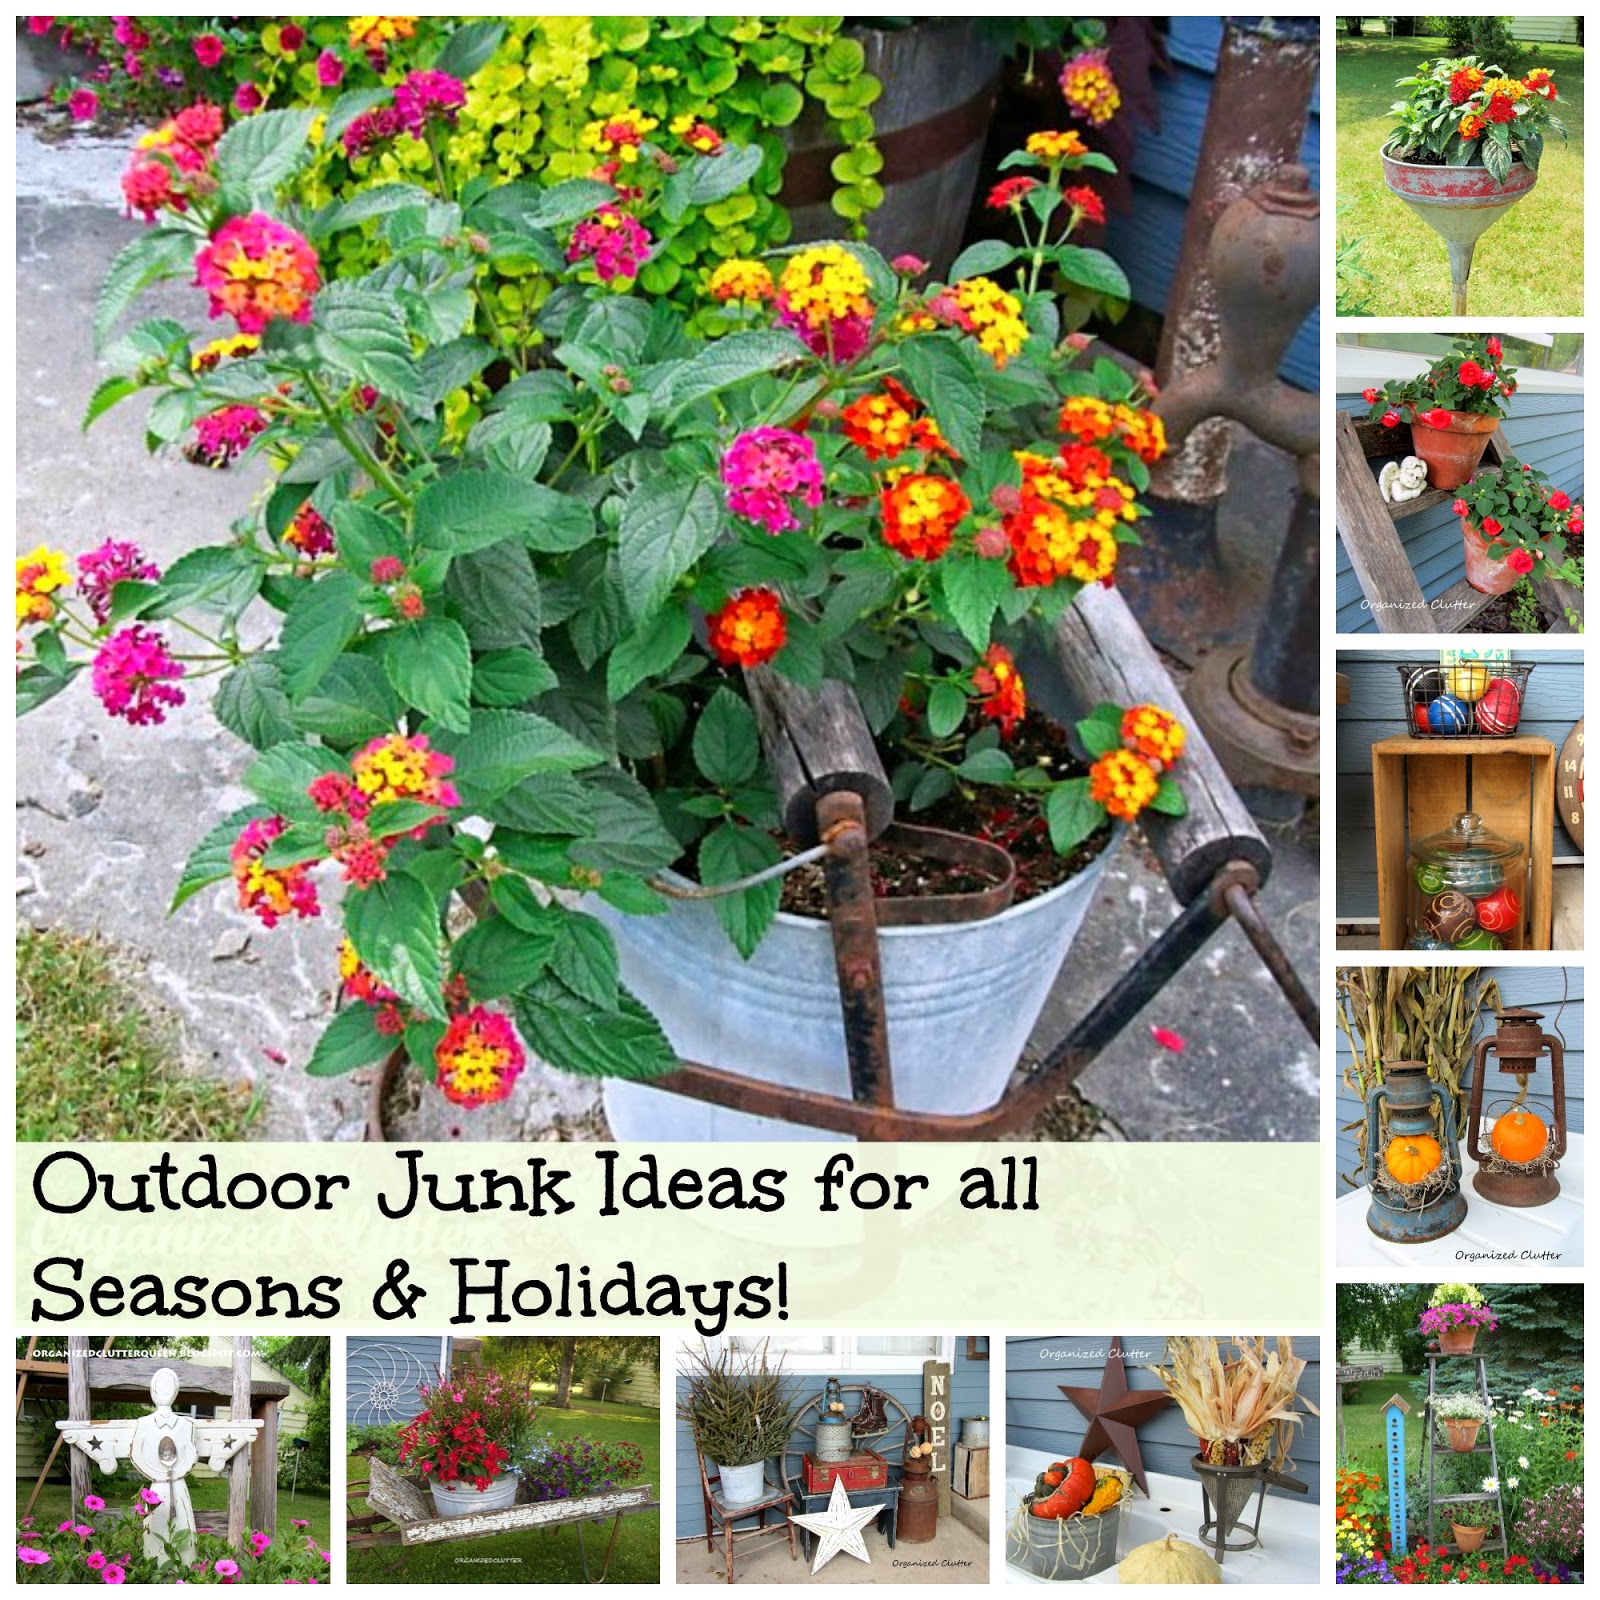 Outdoor Junk Decorating Ideas for all Seasons & Holidays www.organizedclutterqueen.blogspot.com